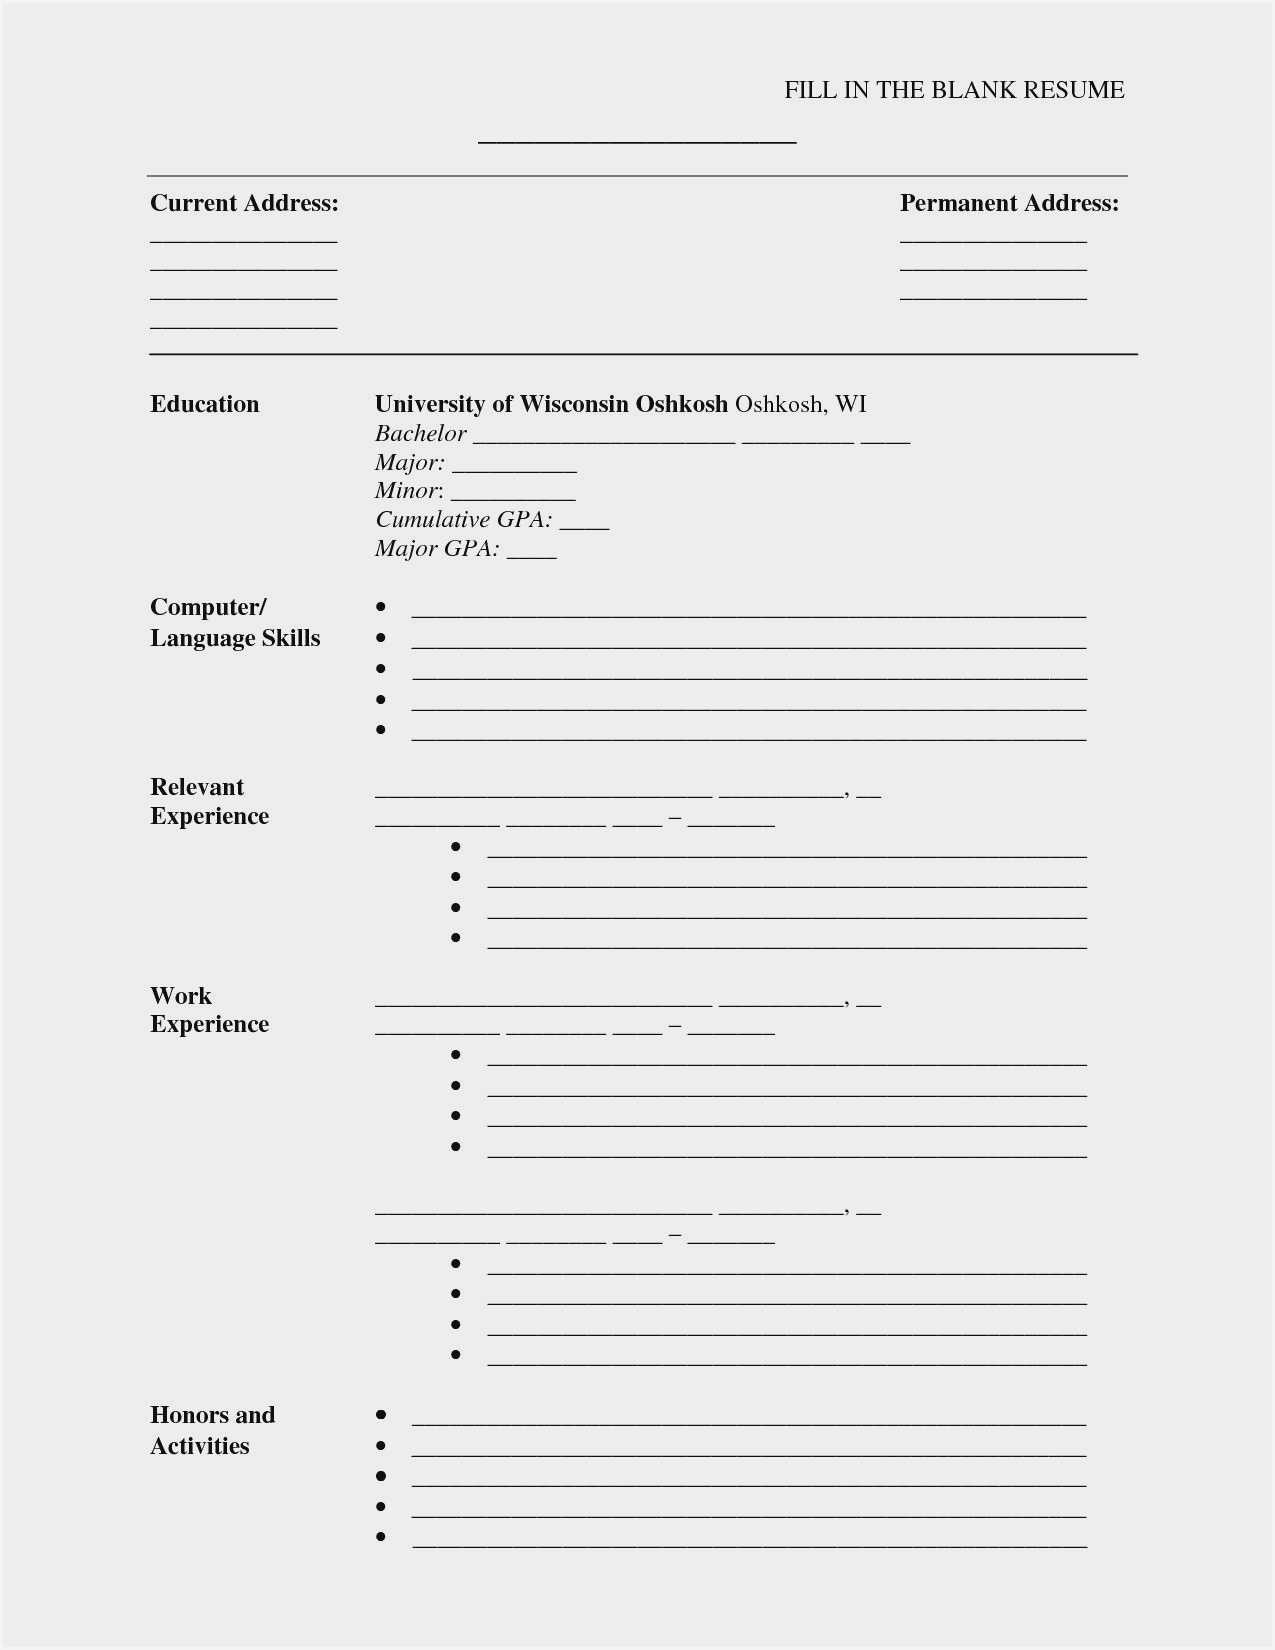 Blank Cv Format Word Download - Resume : Resume Sample #3945 Regarding Free Blank Resume Templates For Microsoft Word